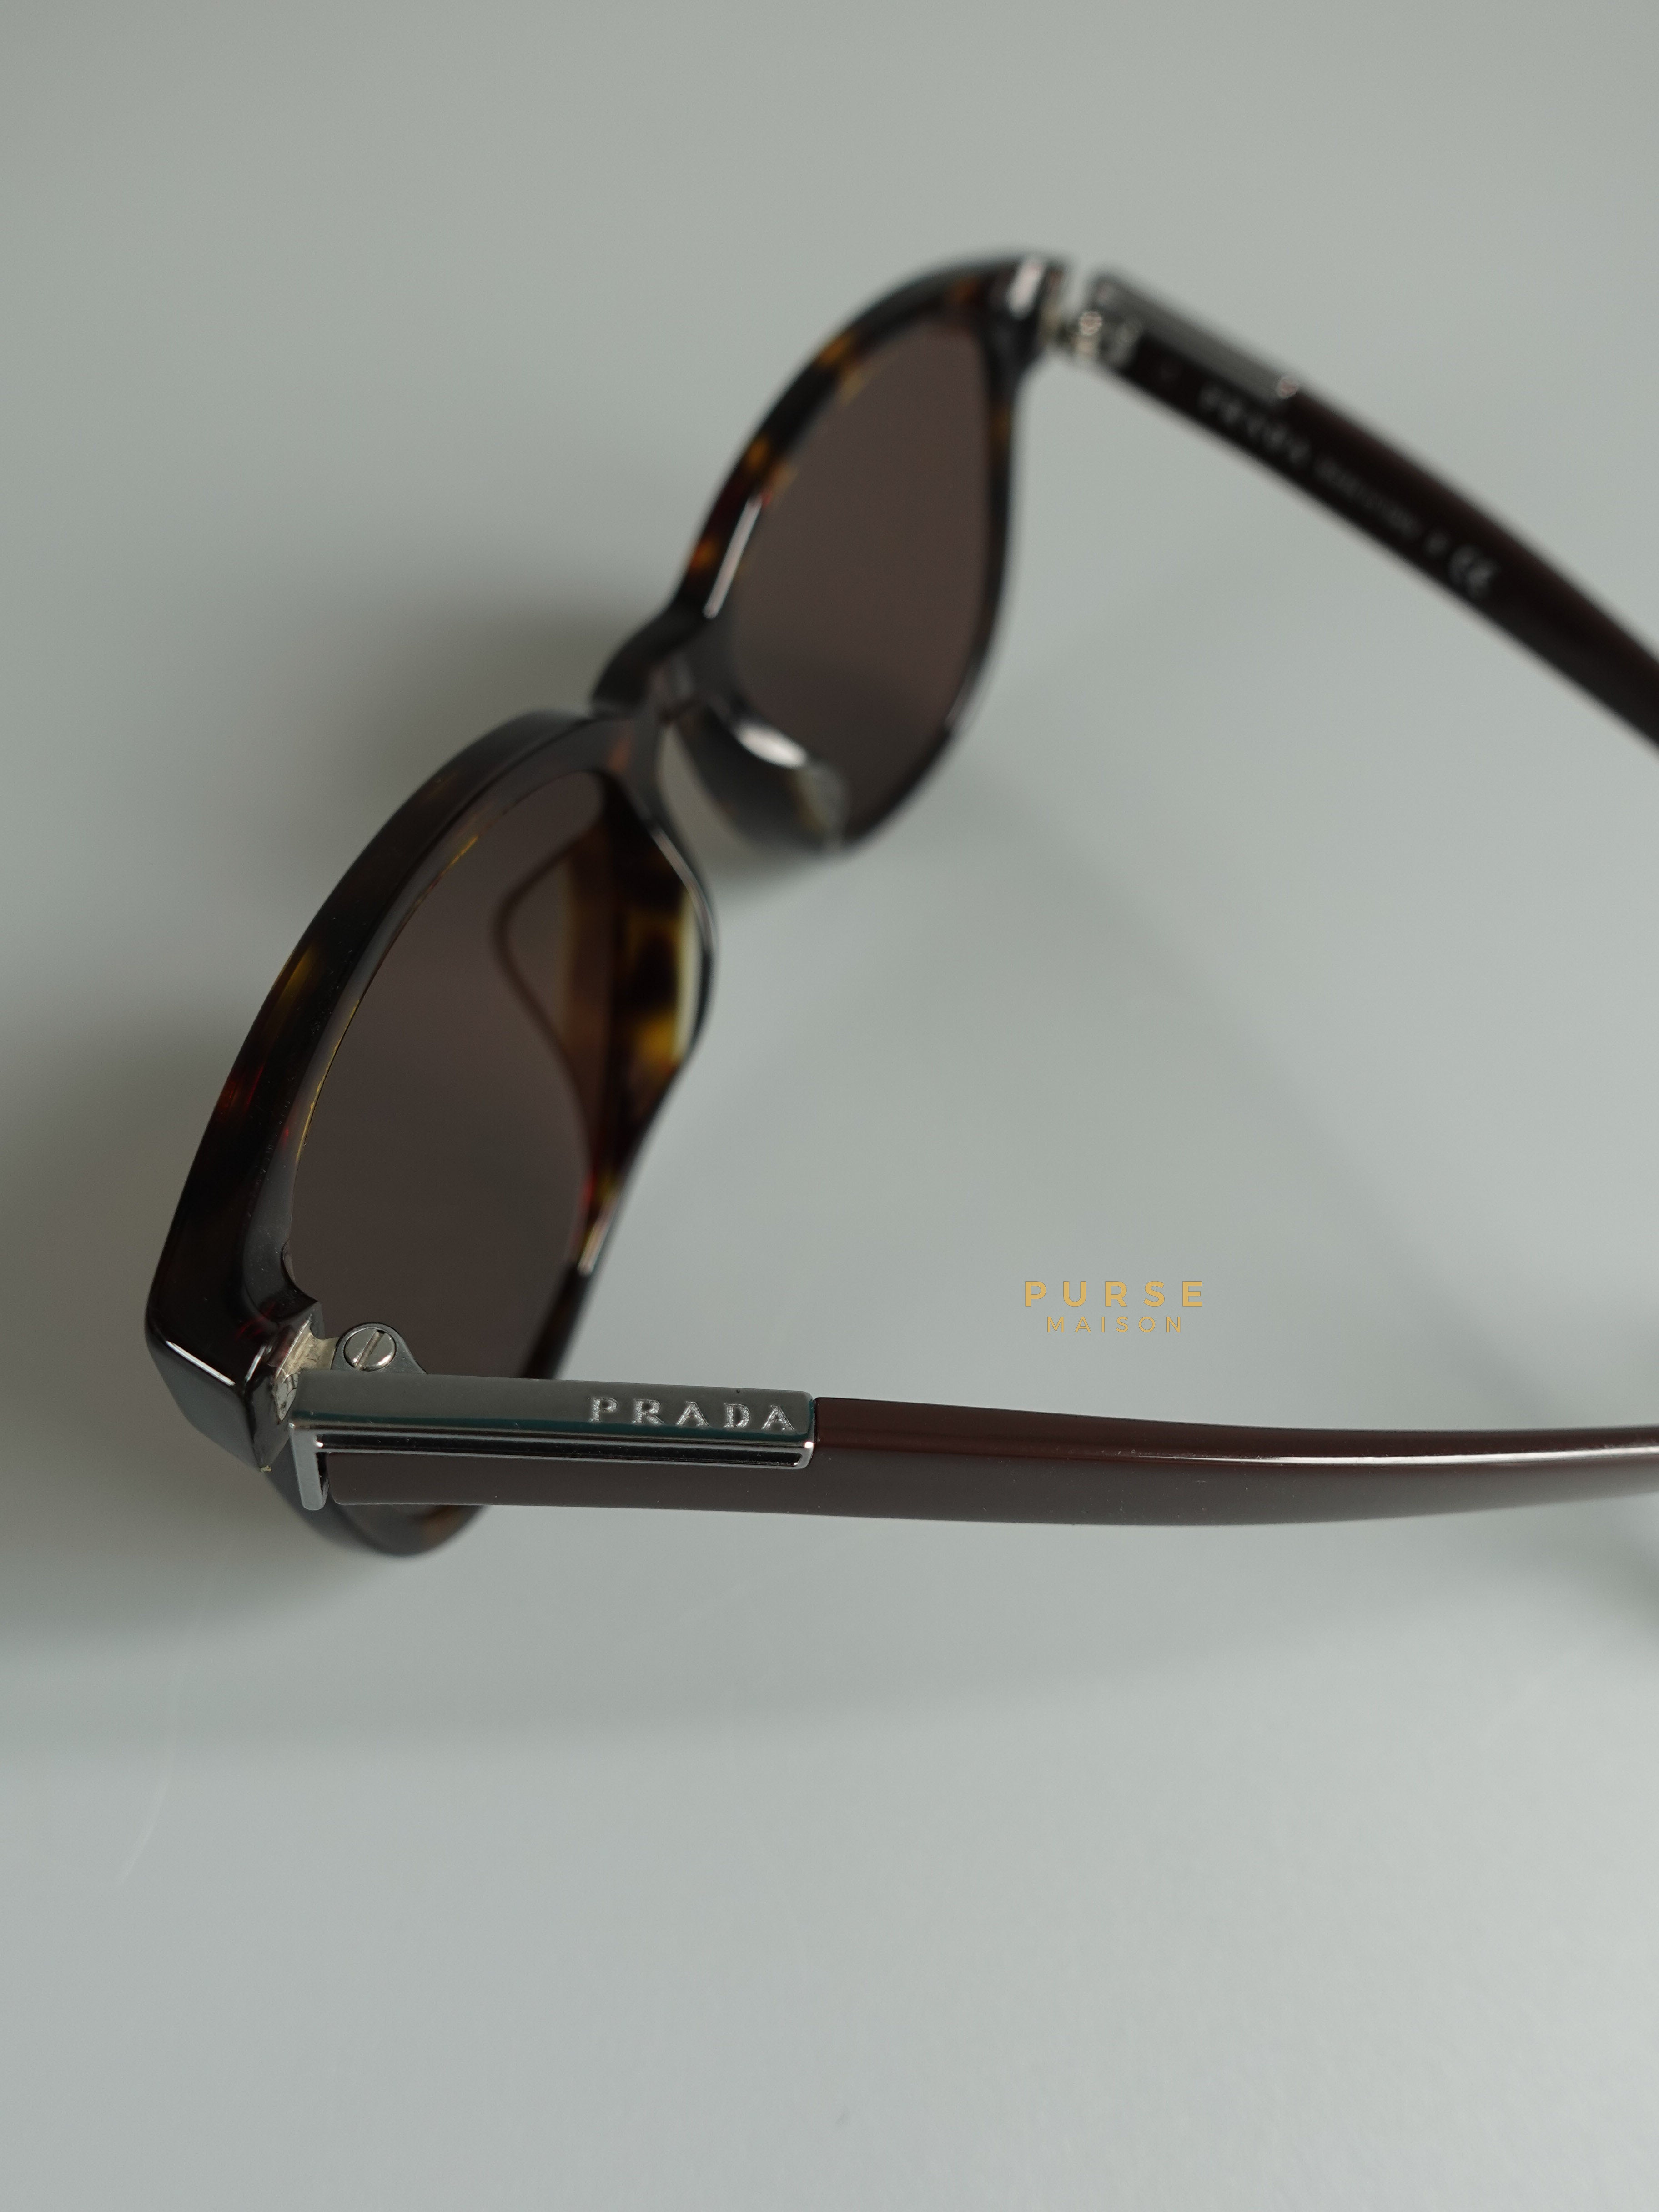 Prada 08U Black Sunglasses | Purse Maison Luxury Bags Shop